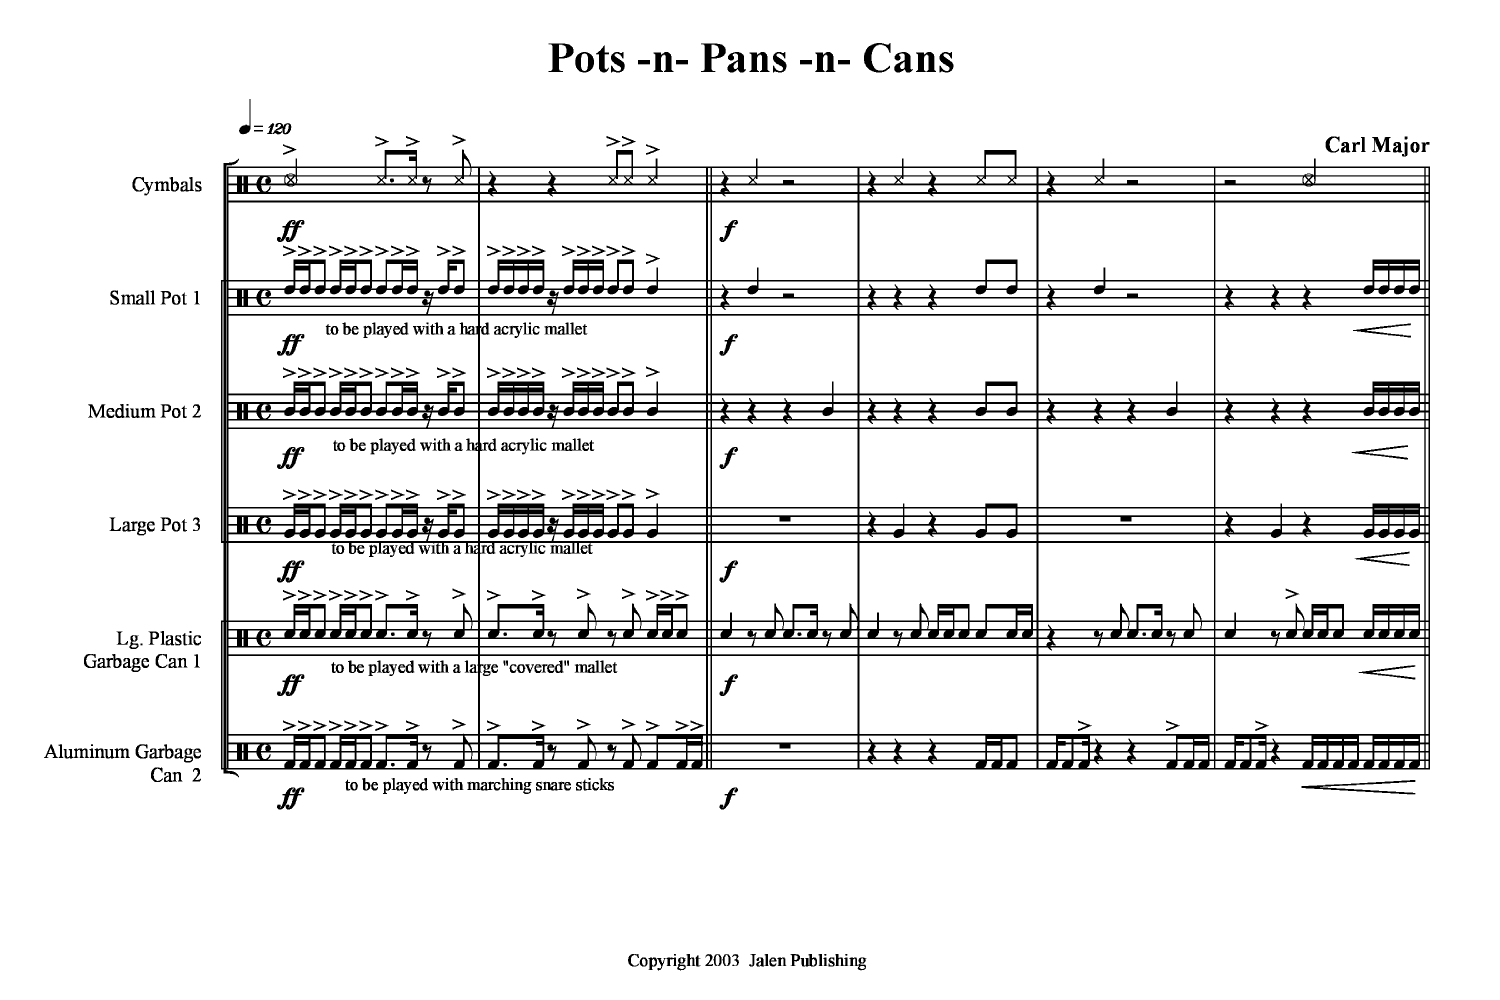 Pots-N-Pans-N-Cans by Carl Major